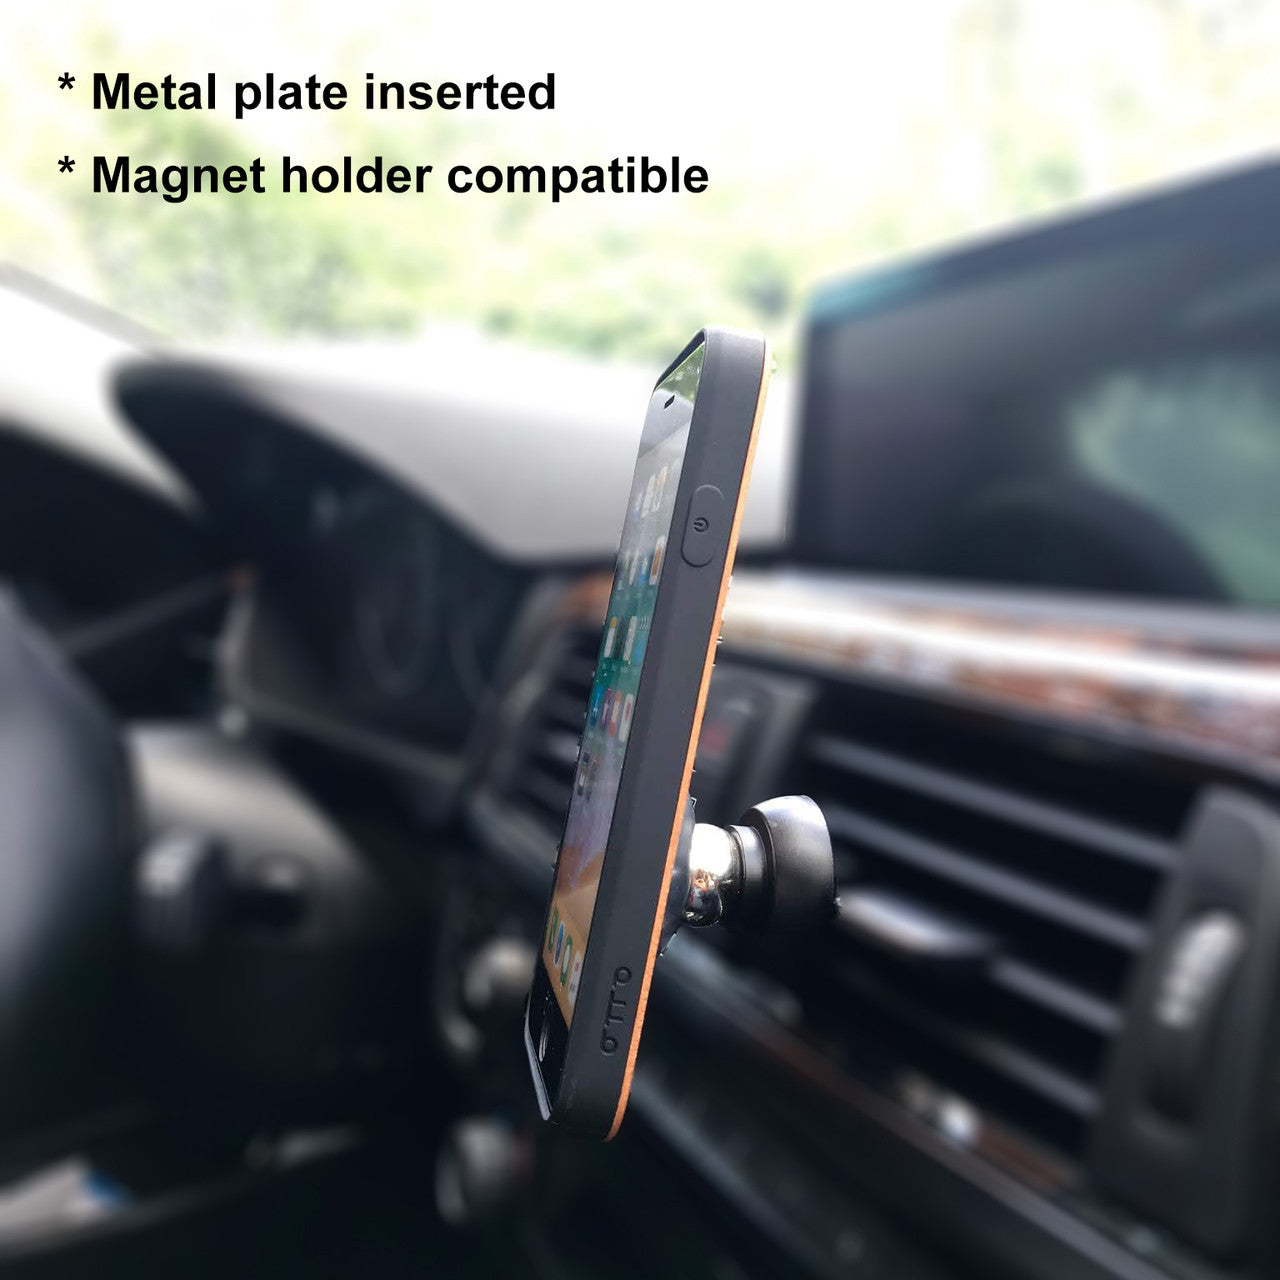 Yoga 1 - Engraved Phone Case